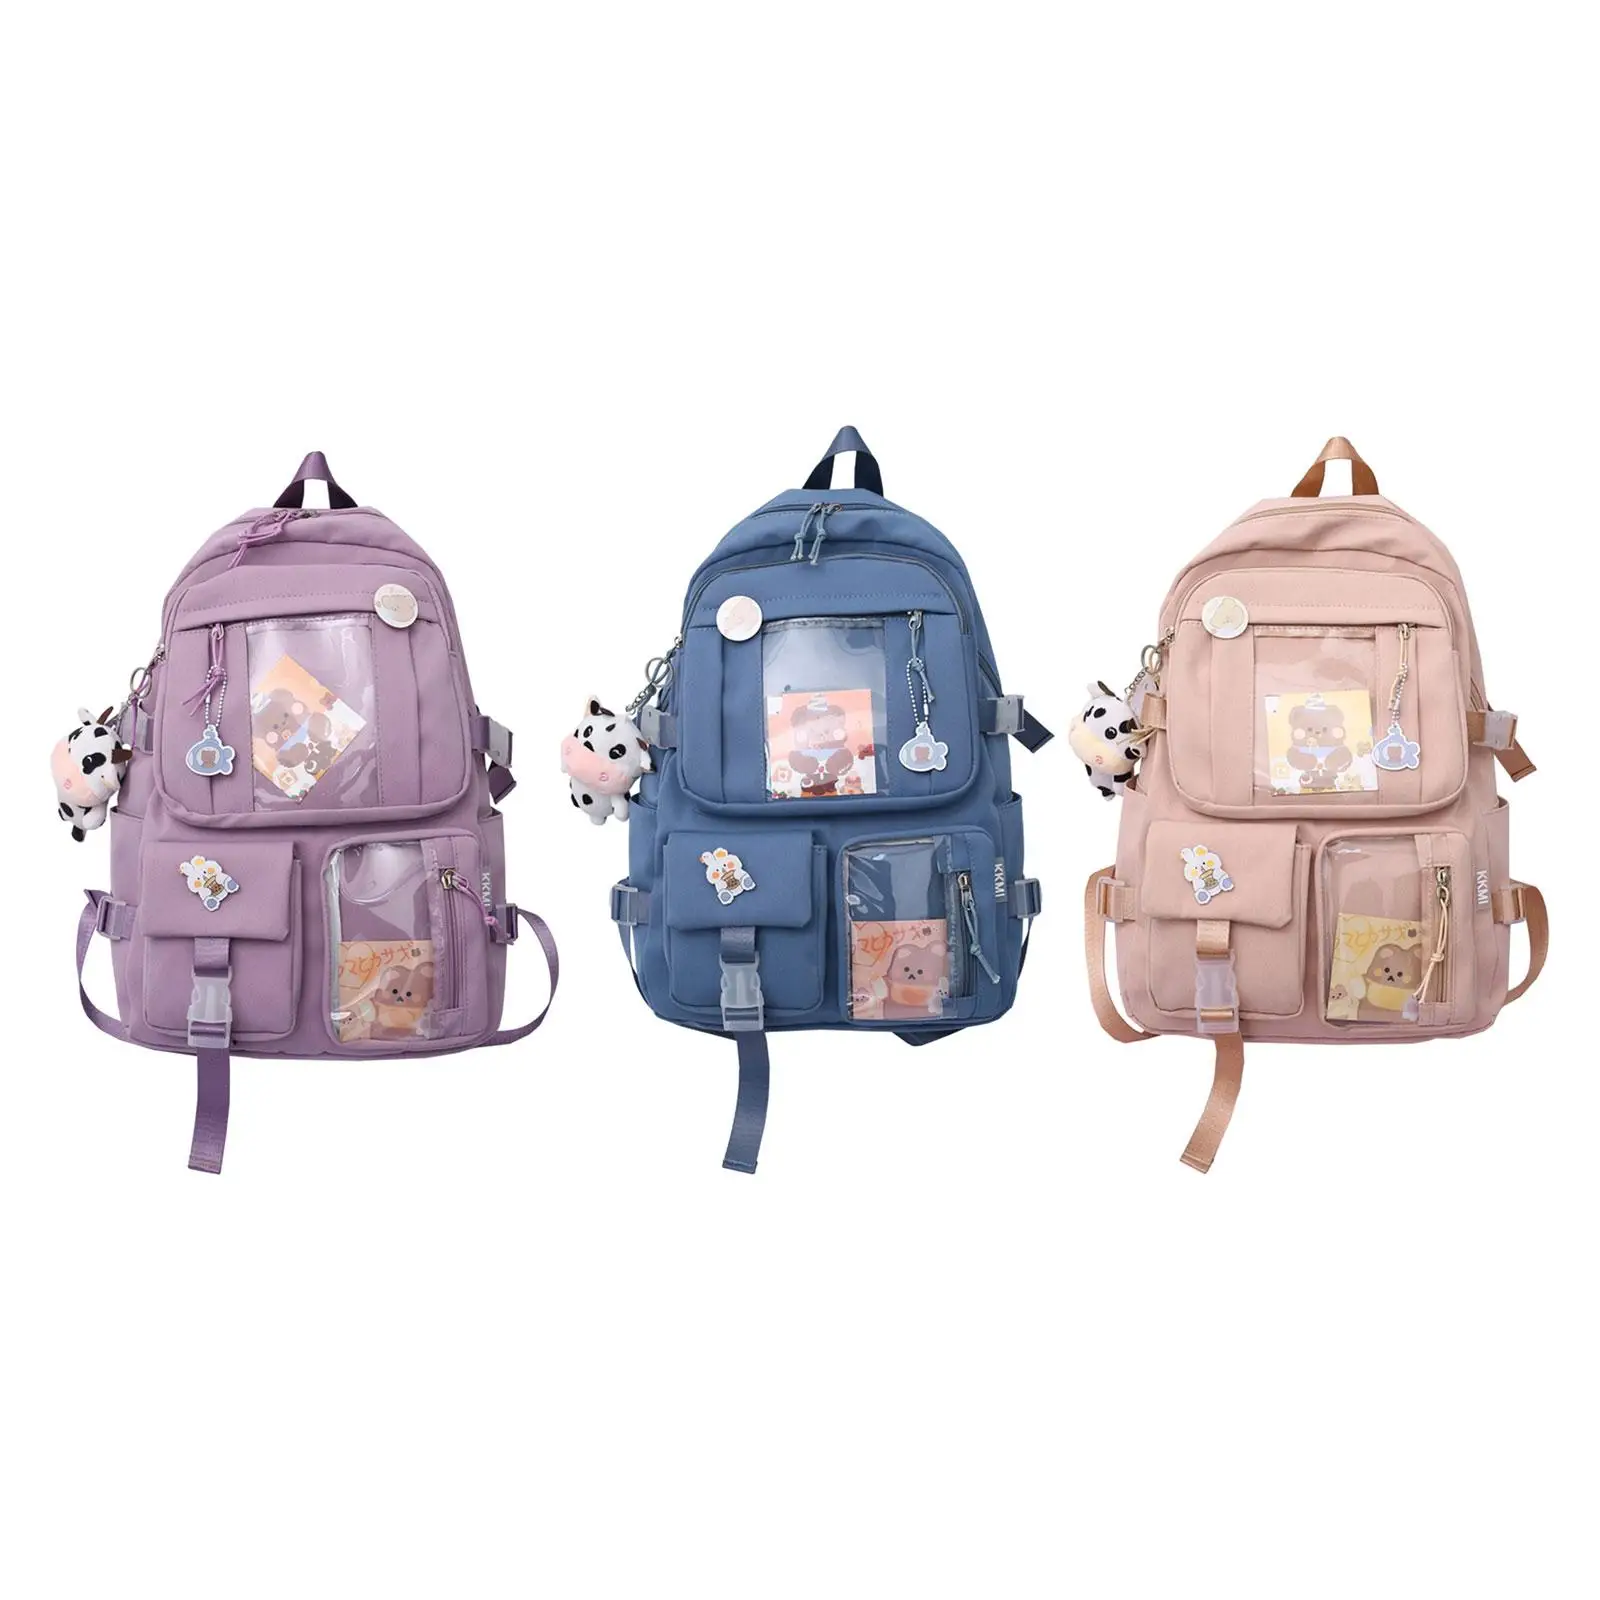 Women Backpack Daypacks Fashion Lightweight Laptop Durable Rucksack School Bag Travel Bag for Teens Student Girls Children Kids